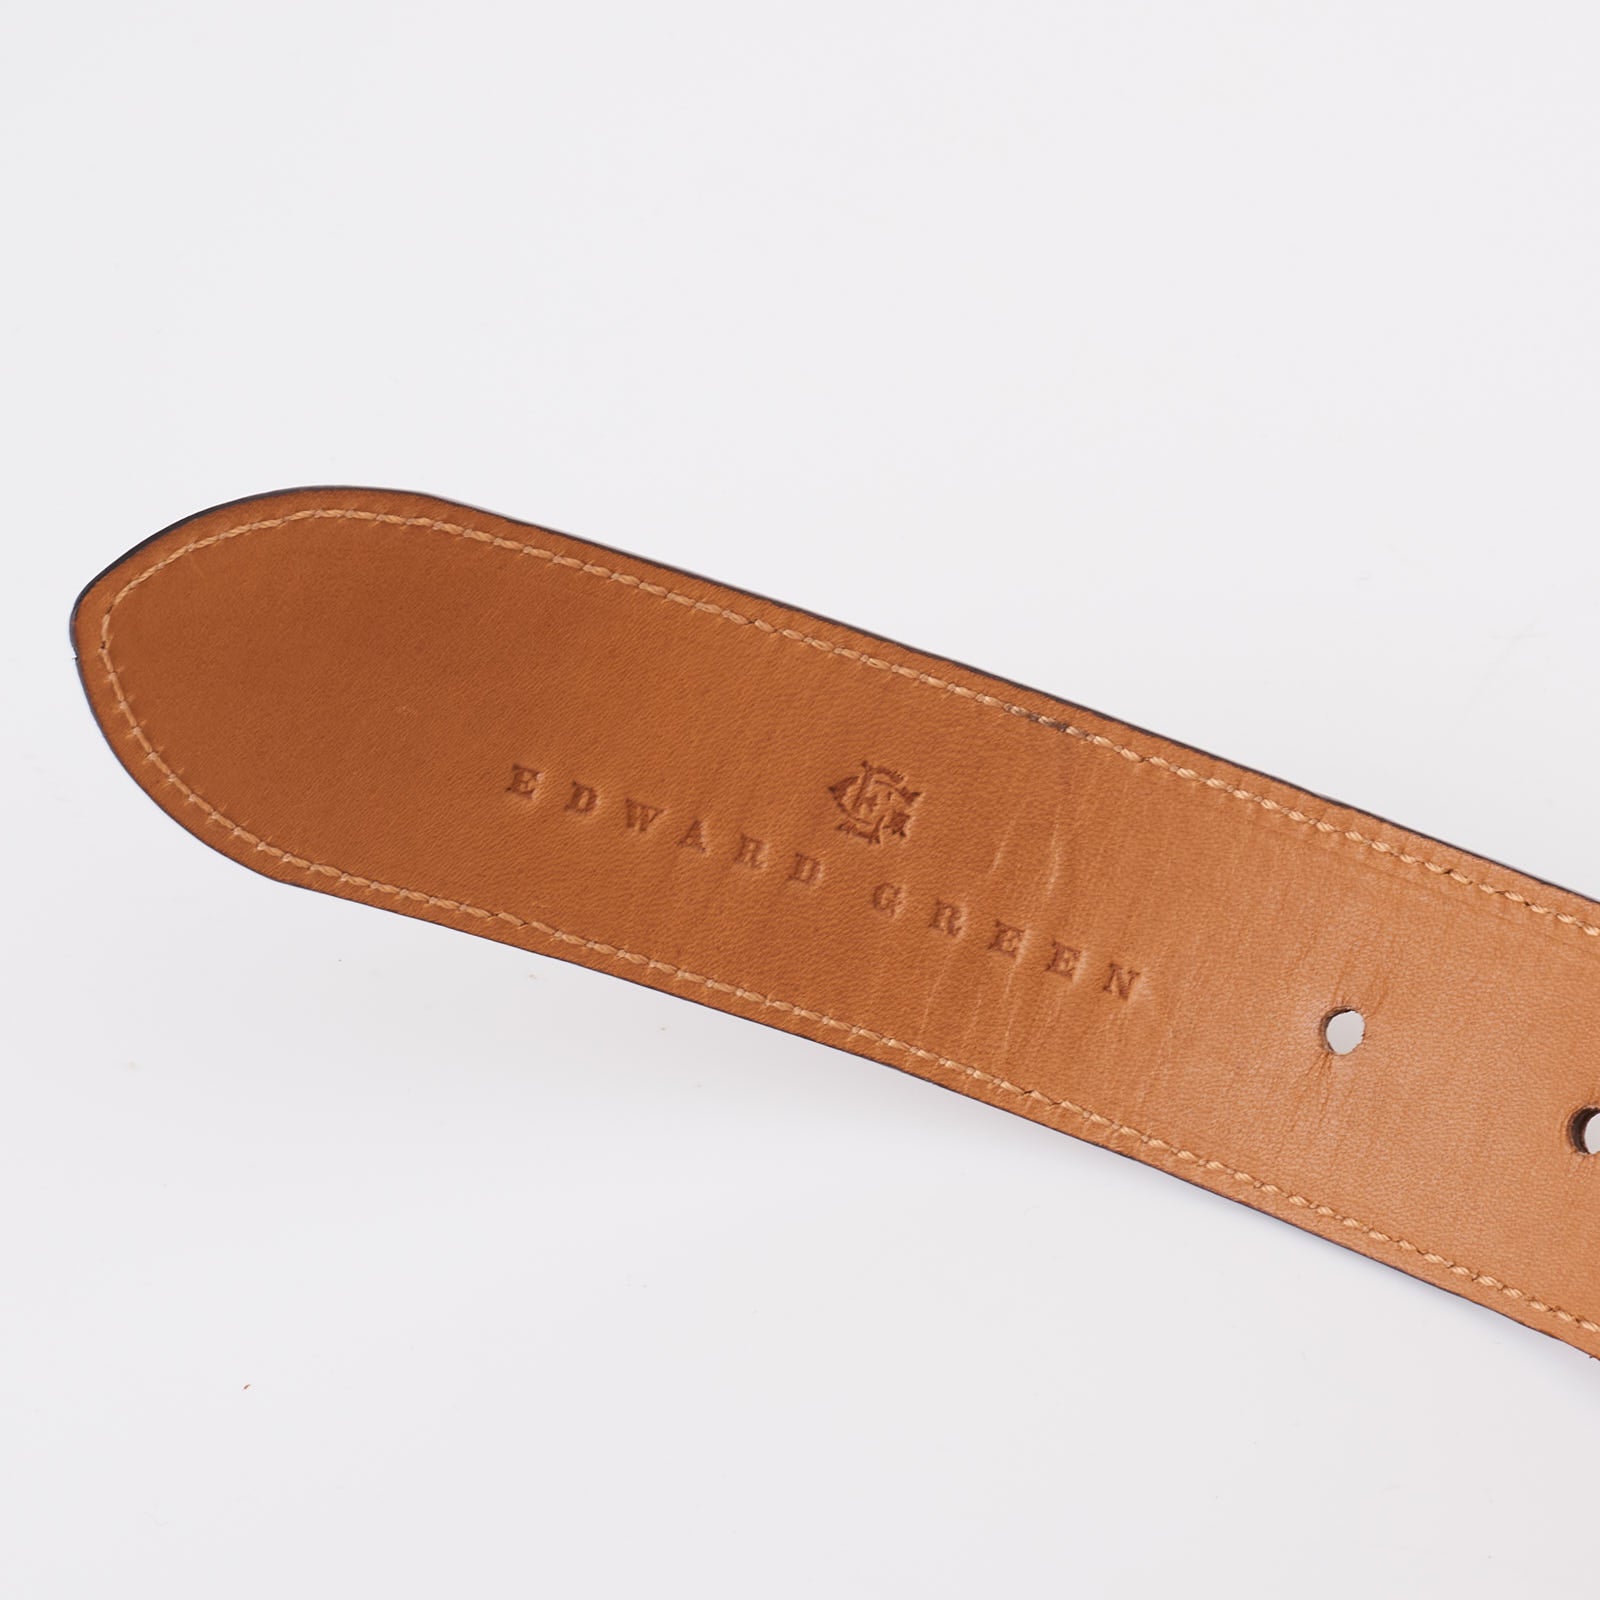 EDWARD GREEN Handmade Beige Leather Belt with Silver-Tone Buckle 90cm 36" EDWARD GREEN